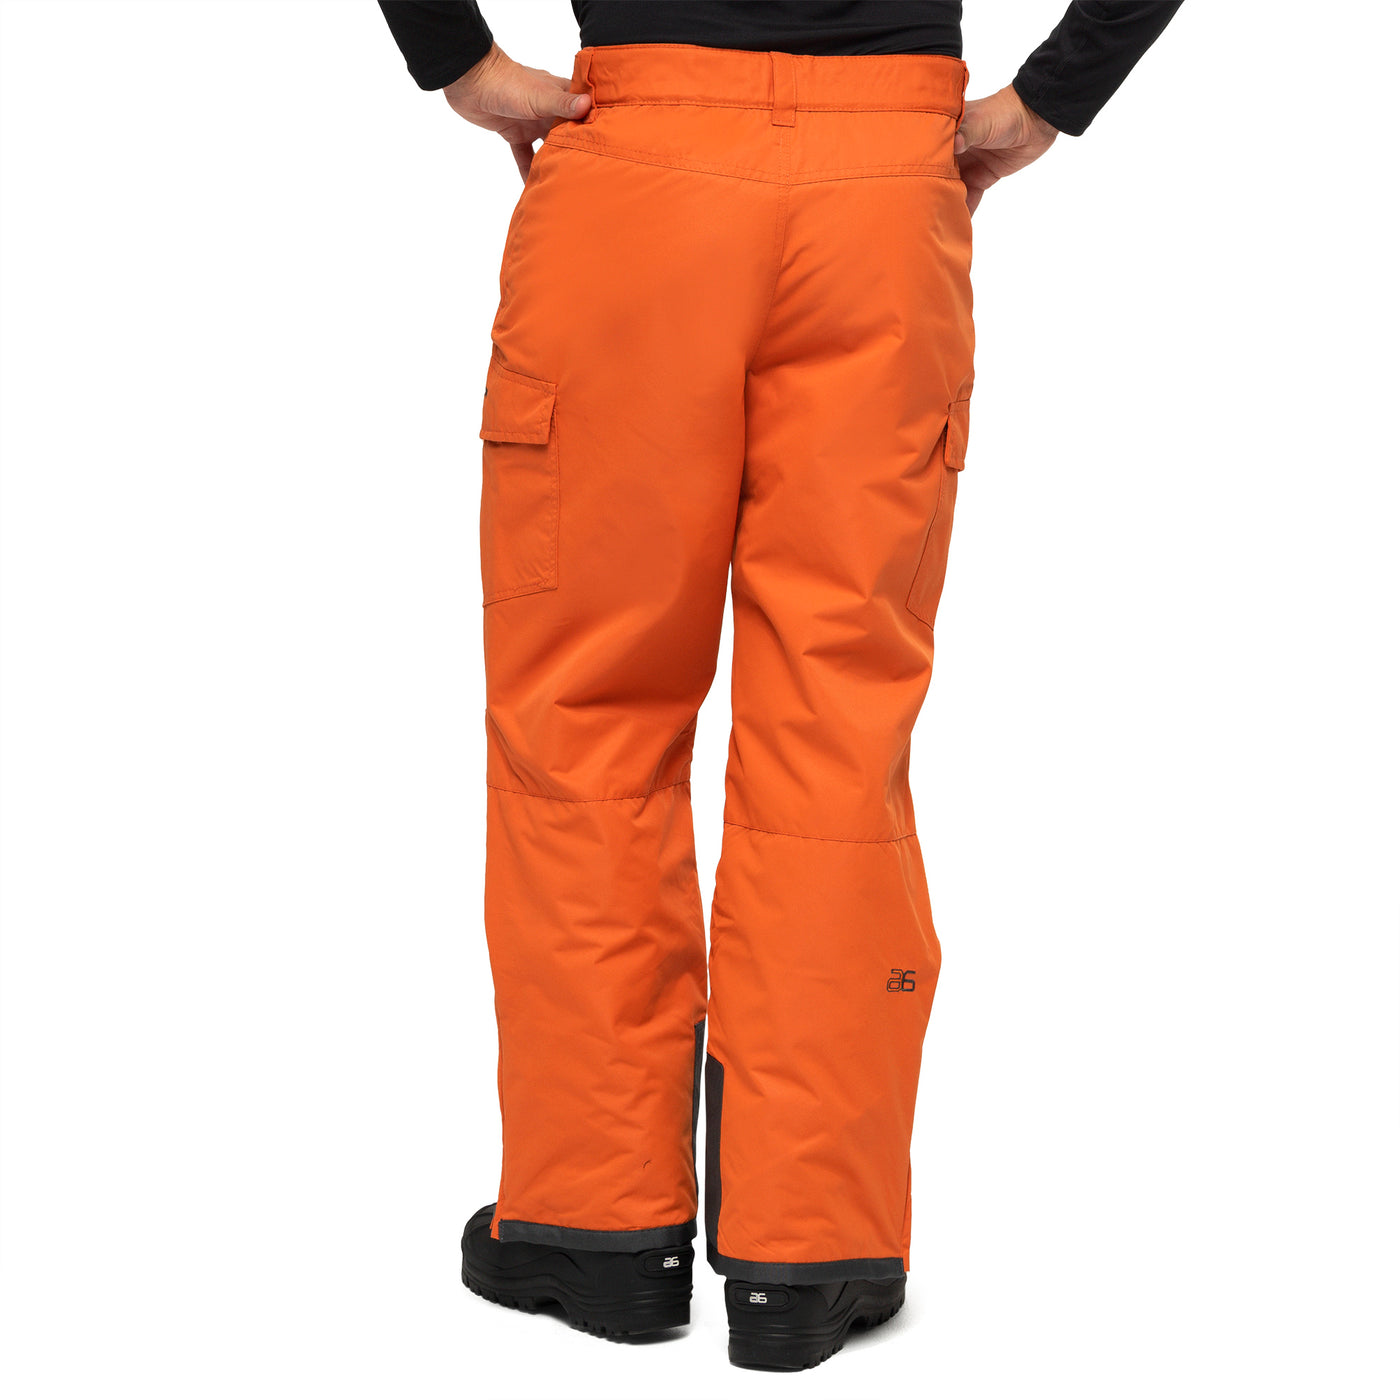 SkiGear by Arctix Men's Snow Sports Cargo Pants 